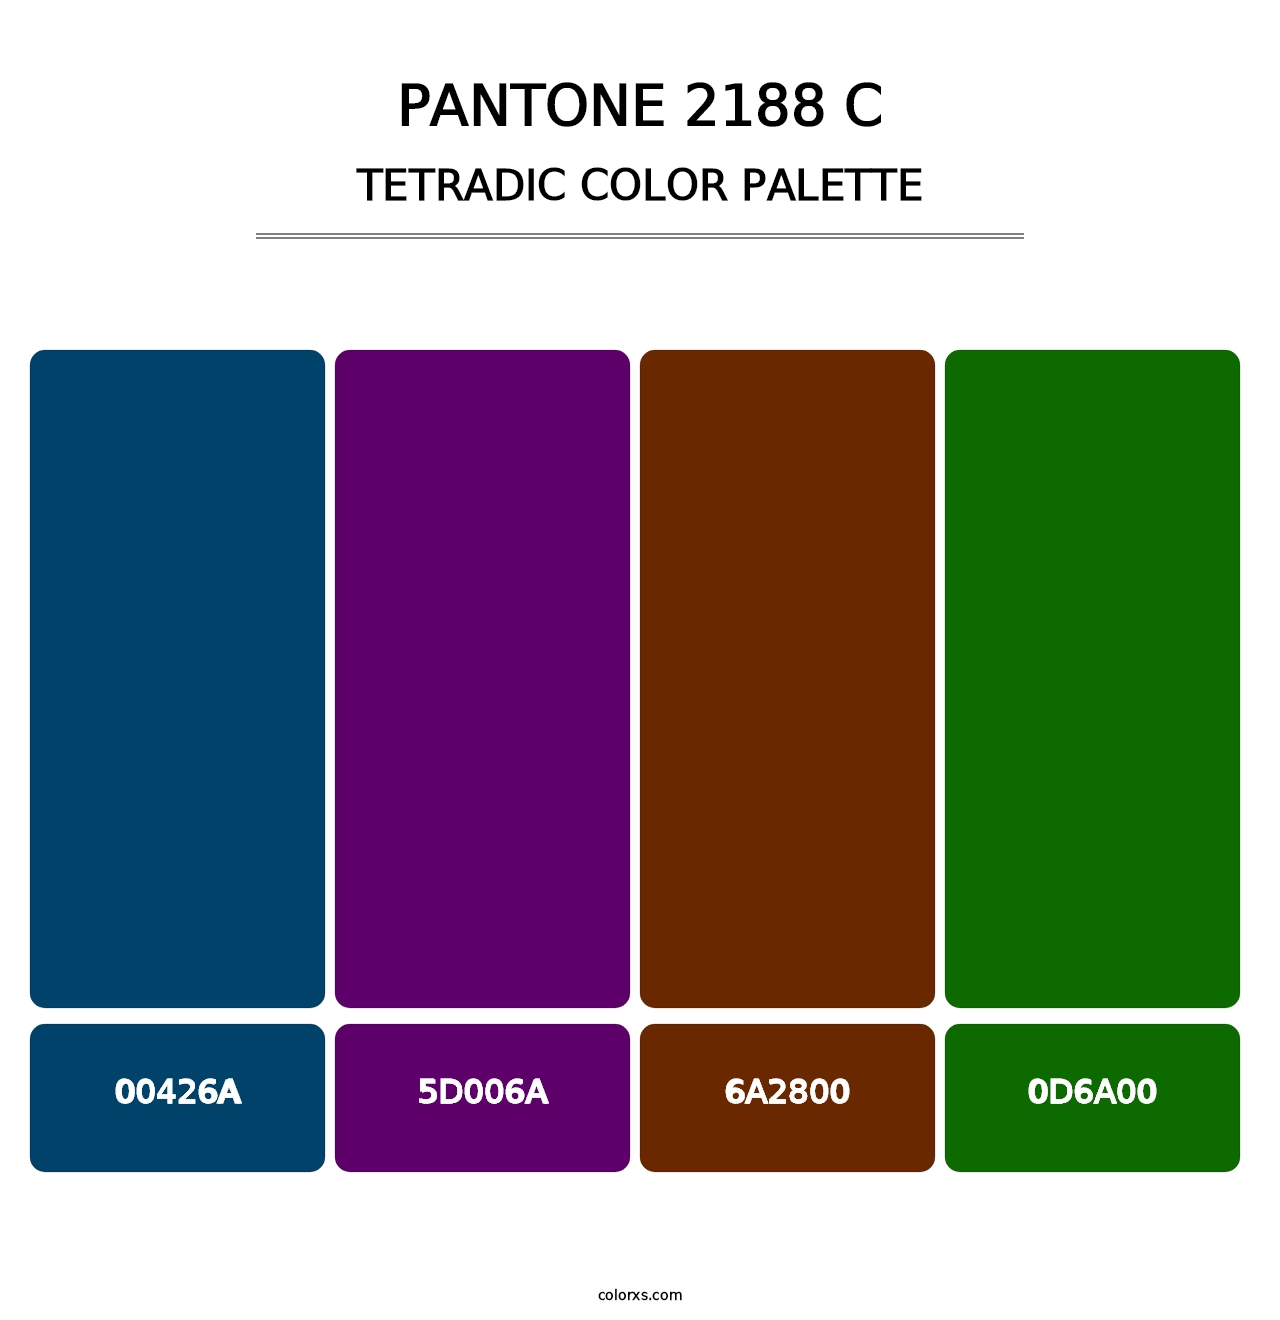 PANTONE 2188 C - Tetradic Color Palette